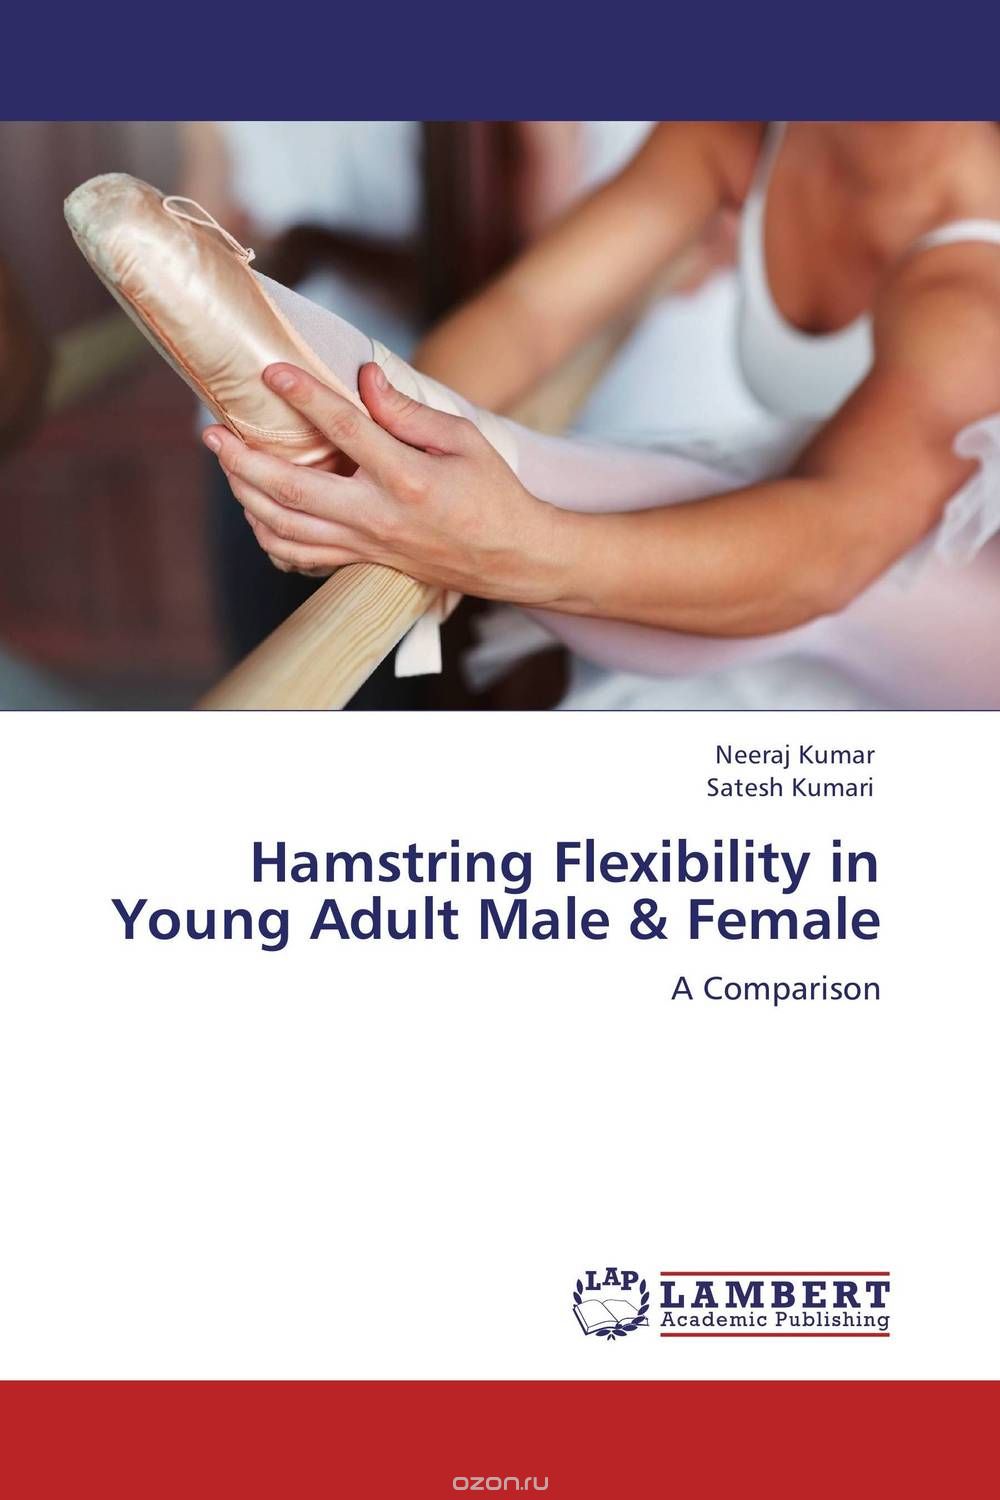 Скачать книгу "Hamstring Flexibility in Young Adult Male & Female"